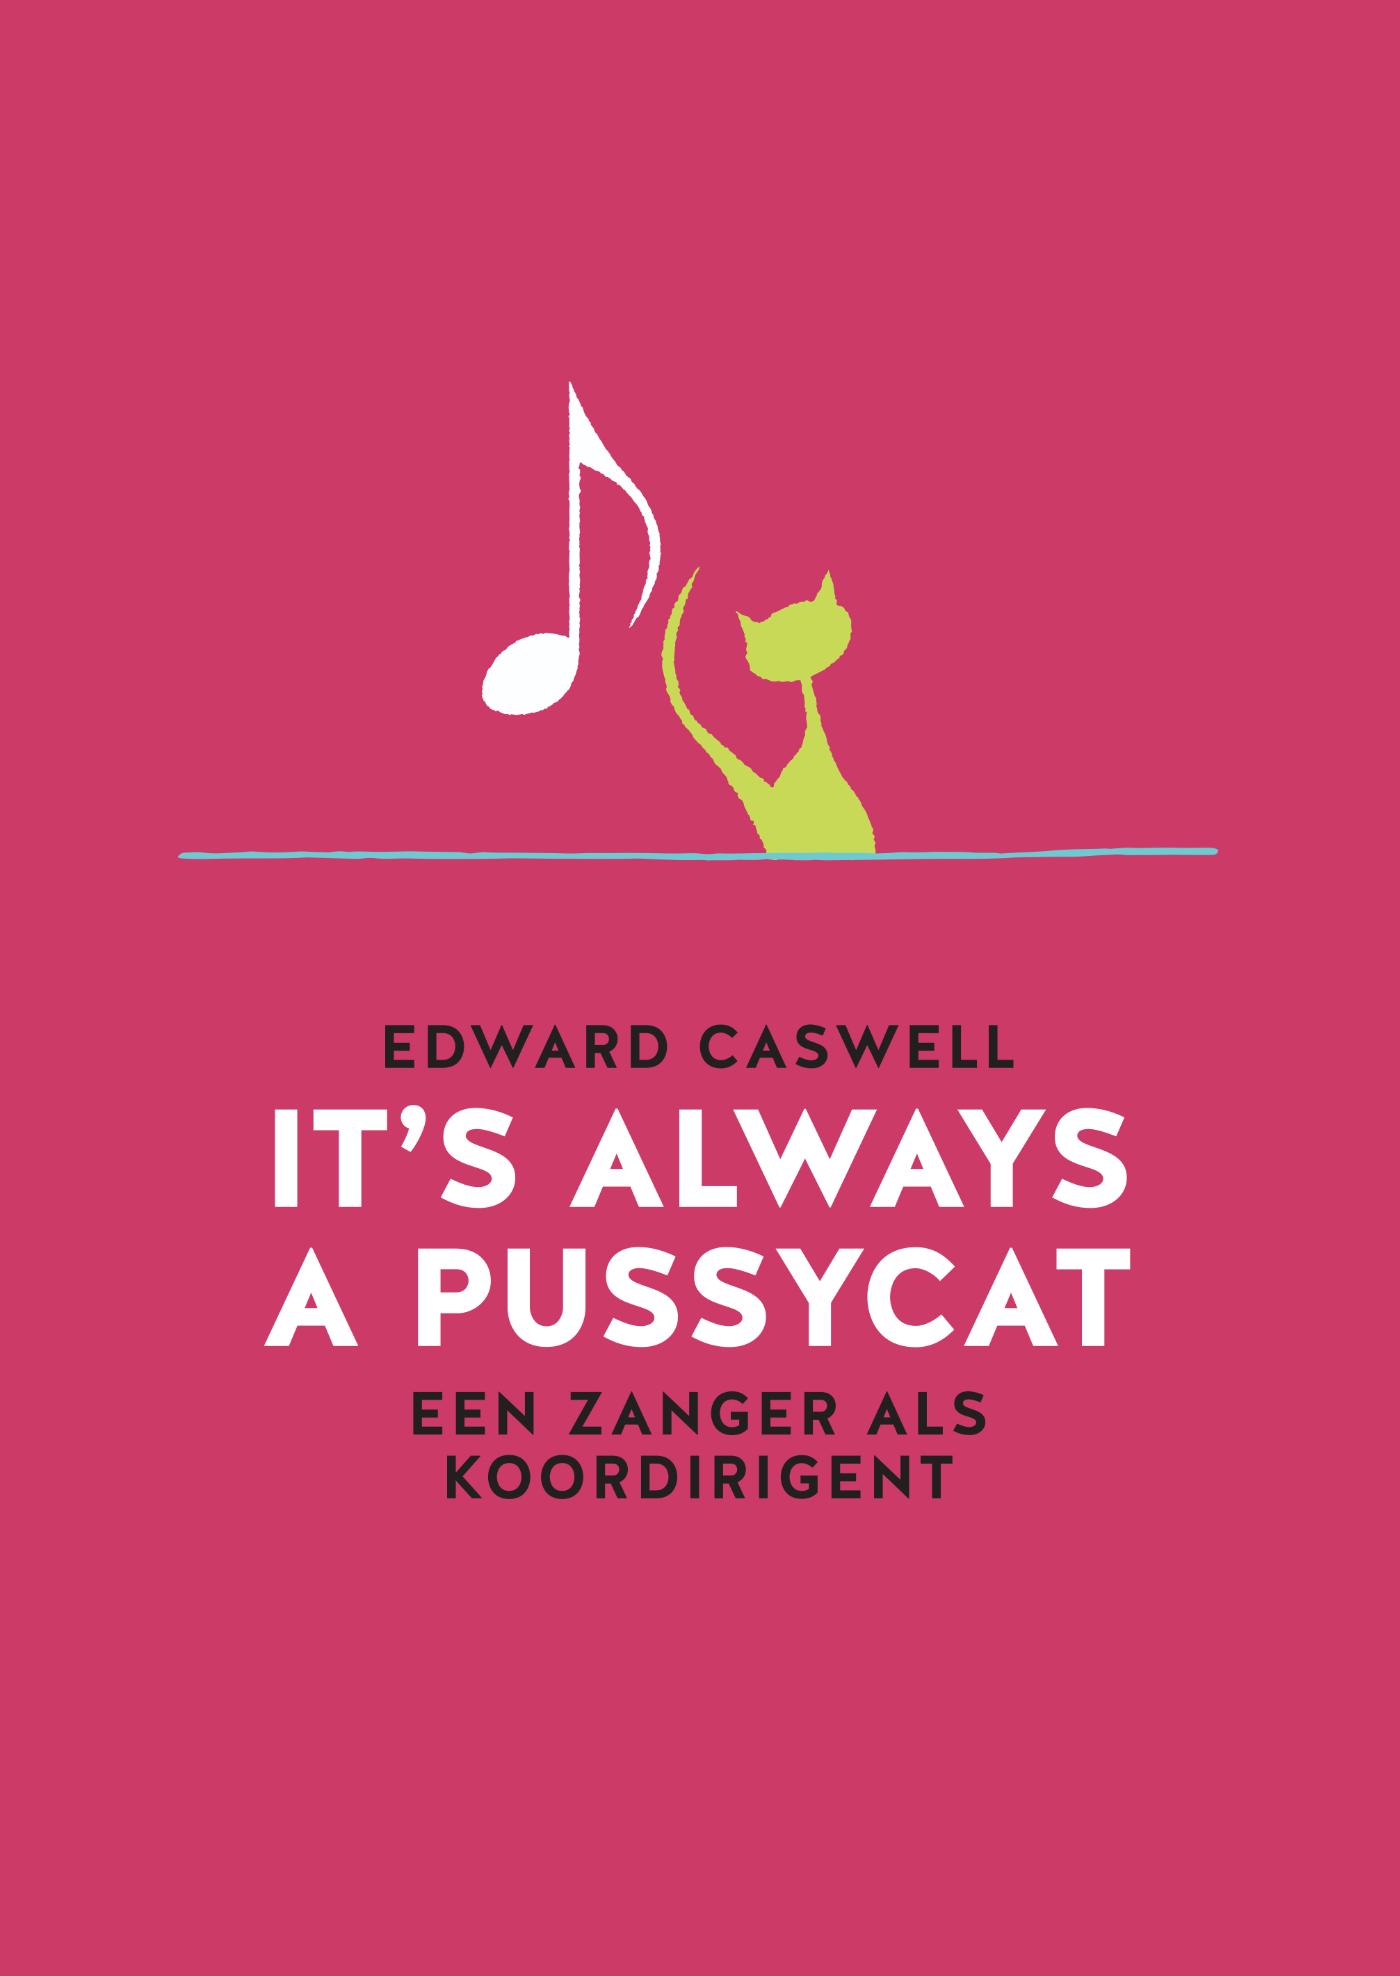 It's always a pussycat (Ebook)